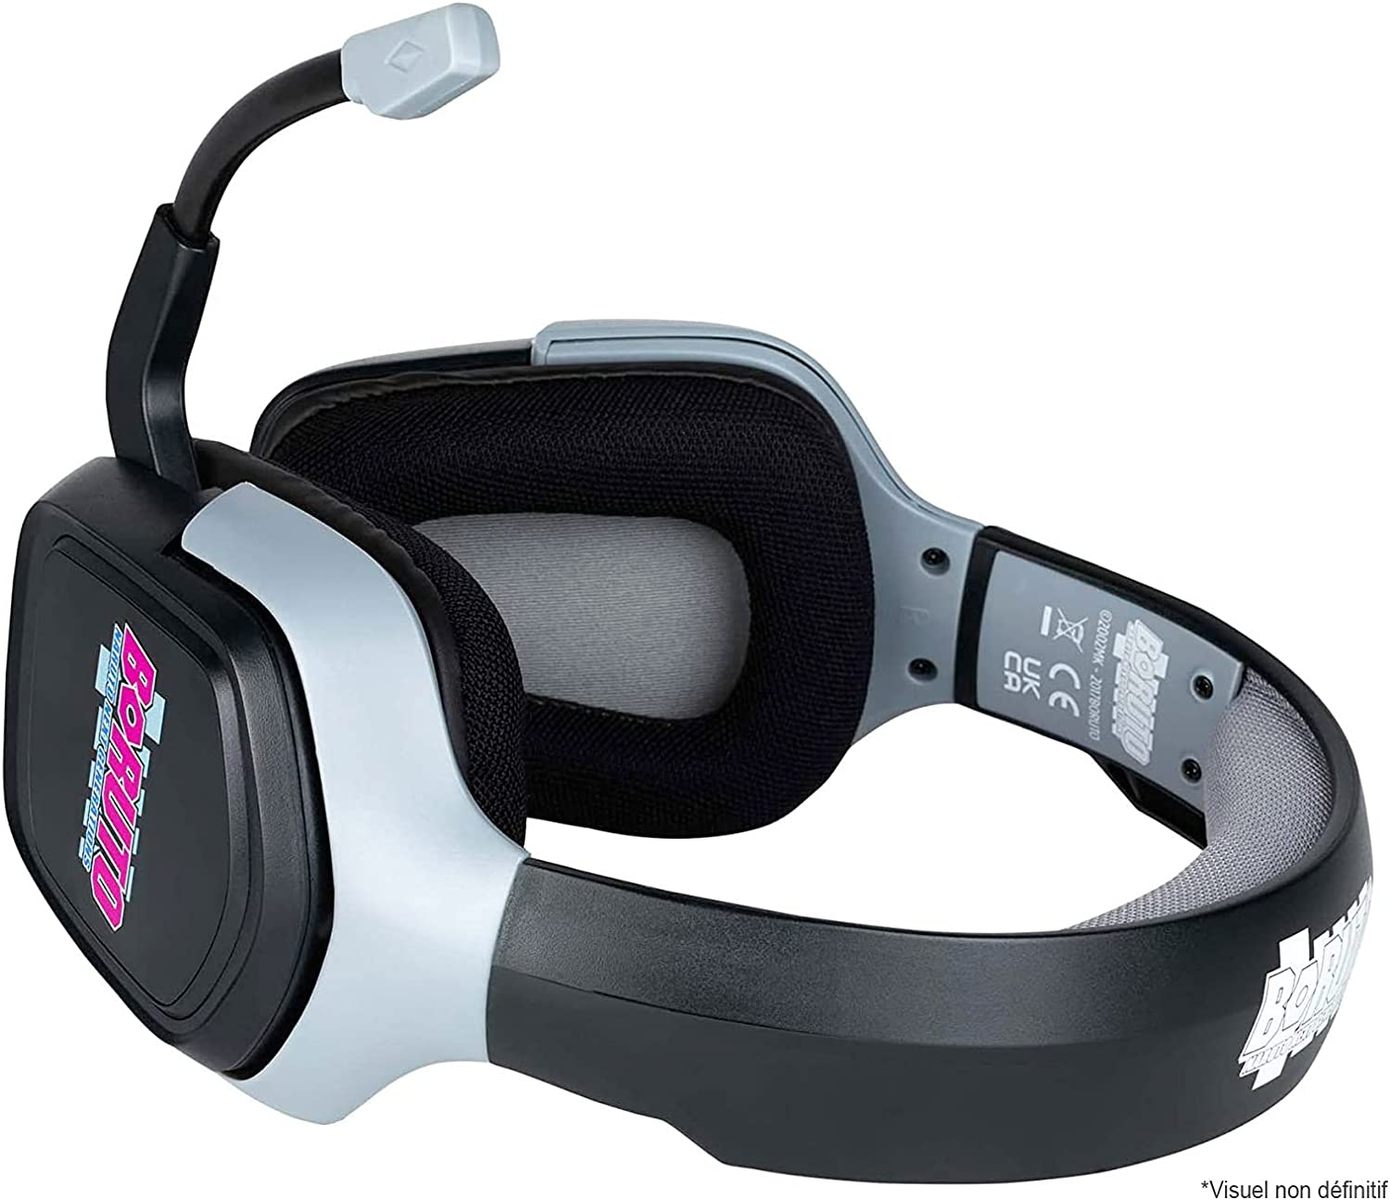 KONIX BORUTO Mehrfarbig Gaming On-ear Headset HEADSET, GAMING